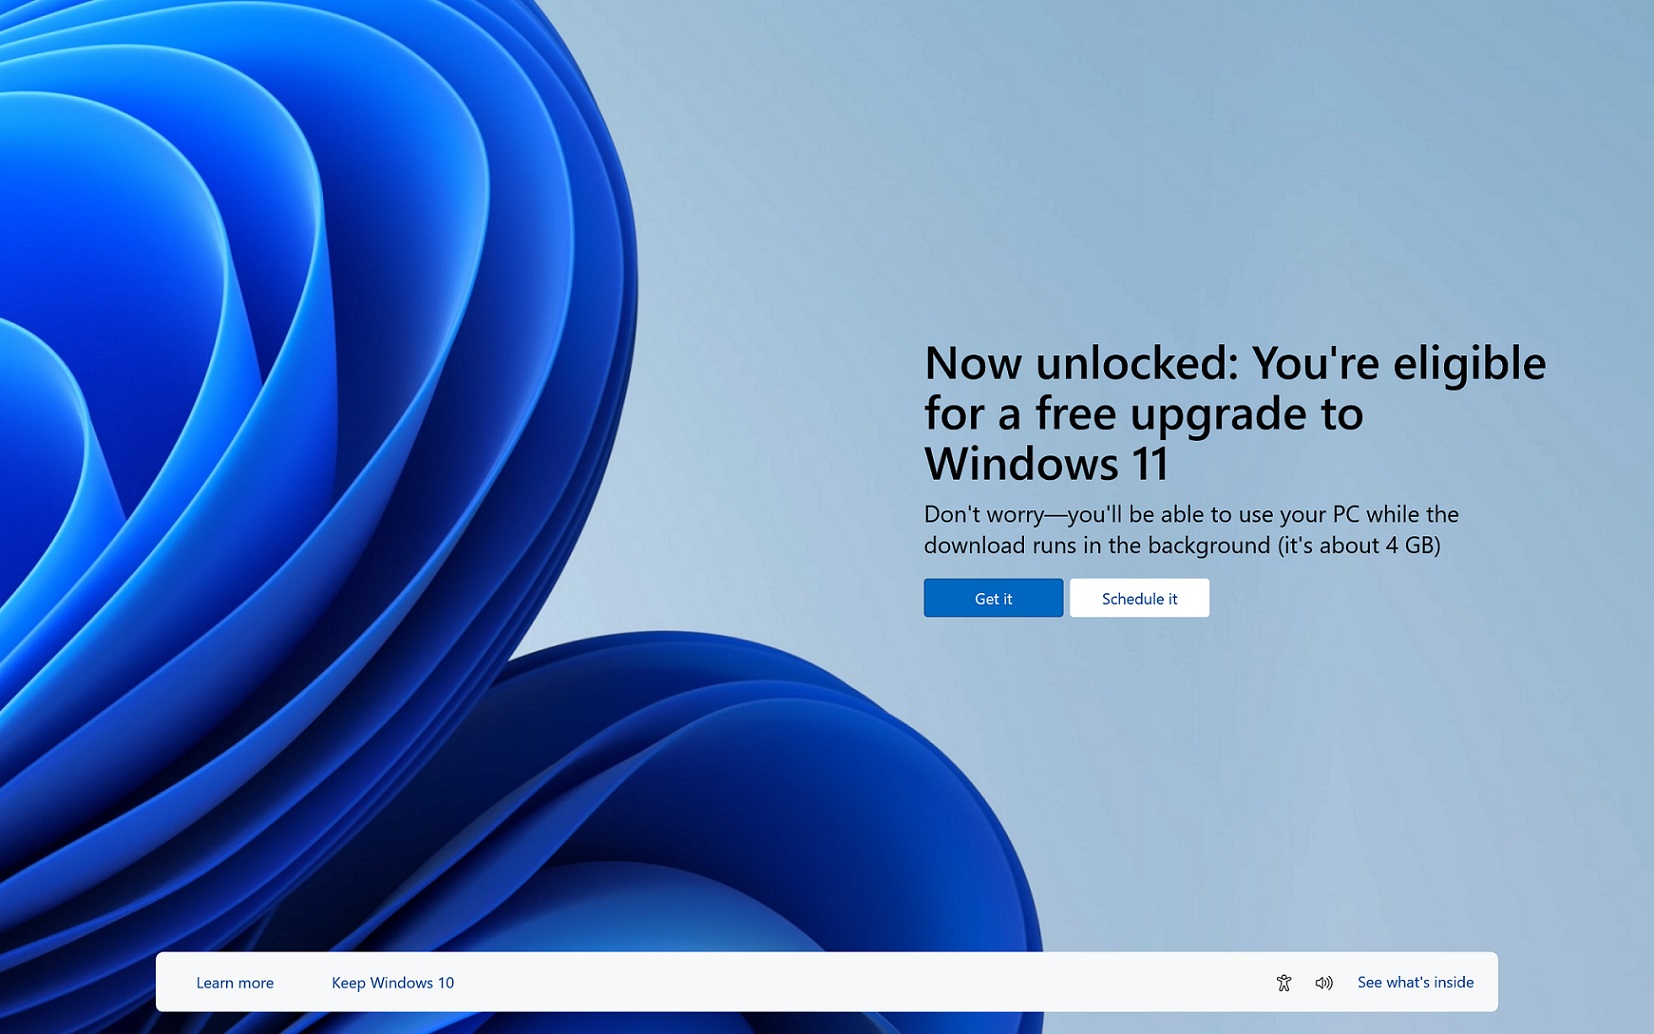 Windows 10 is nagging users with full-screen Windows 11 “free upgrade” notifications Windows-11-upgrade-alert.jpg